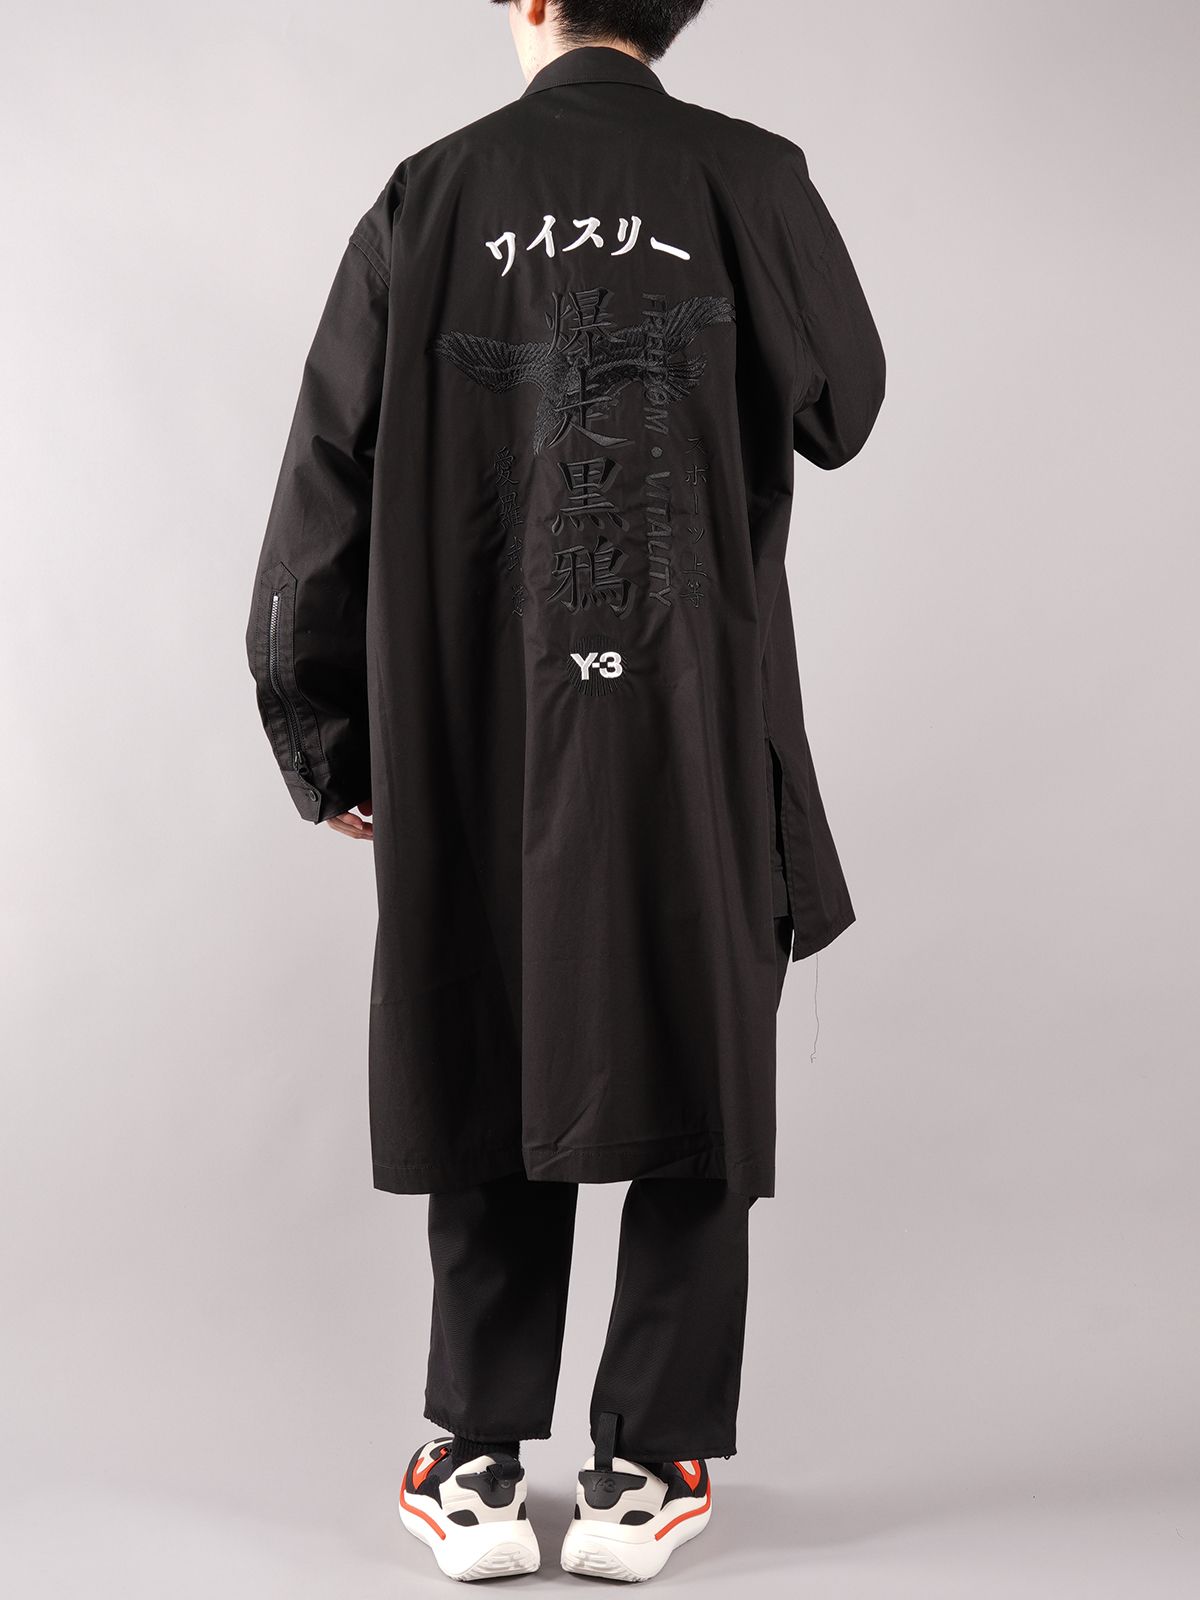 Y-3ロングシャツ / U CRFT GRAPHIC LONG SHIRT | www.phukettopteam.com